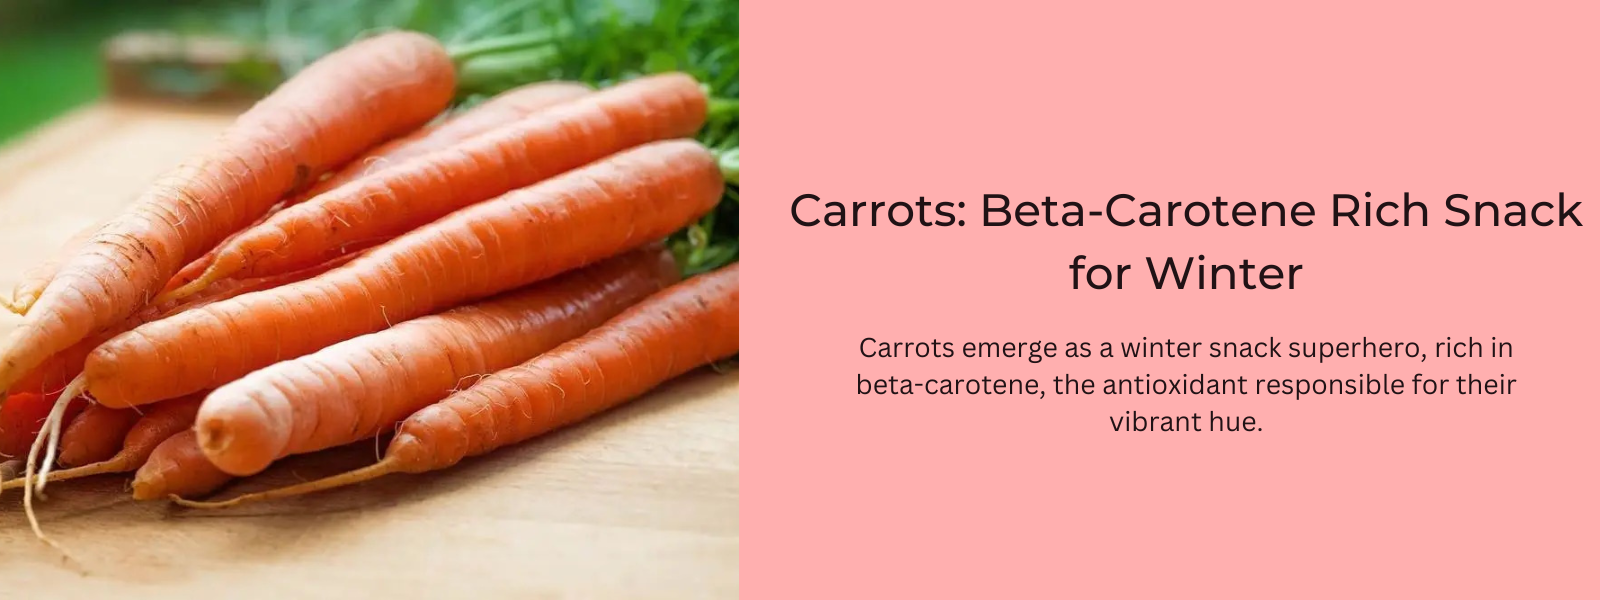 Carrots: Beta-Carotene Rich Snack for Winter